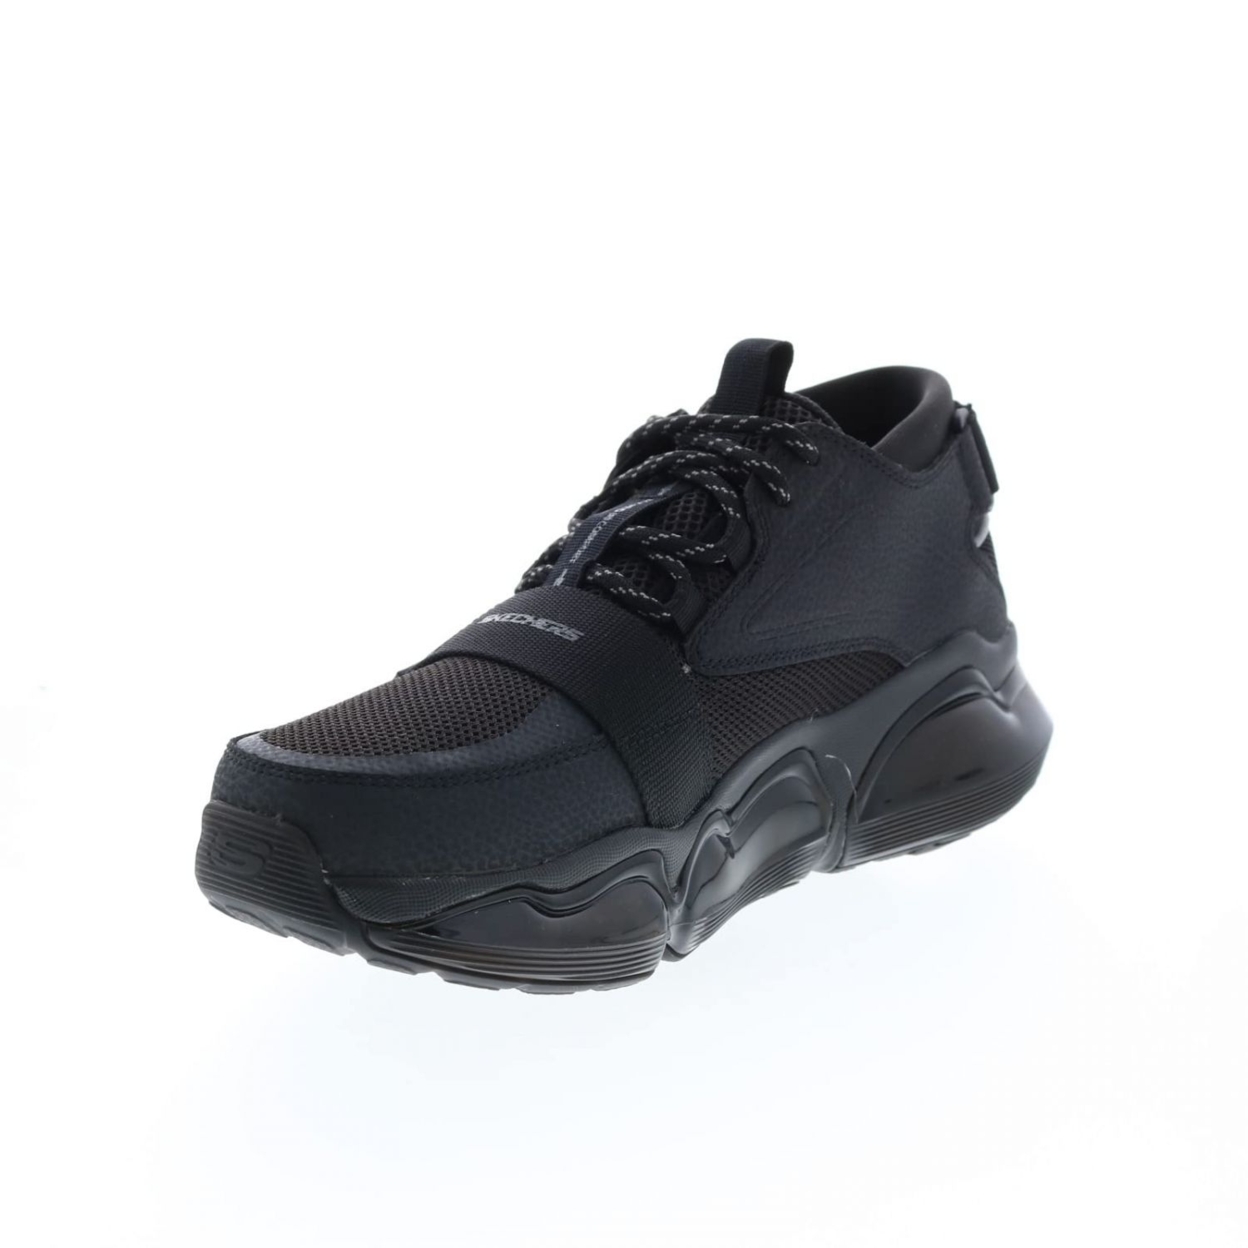 Skechers Mens Air Cushioning Mega Lifestyle Sneakers Shoes BLACK - BLACK, 11